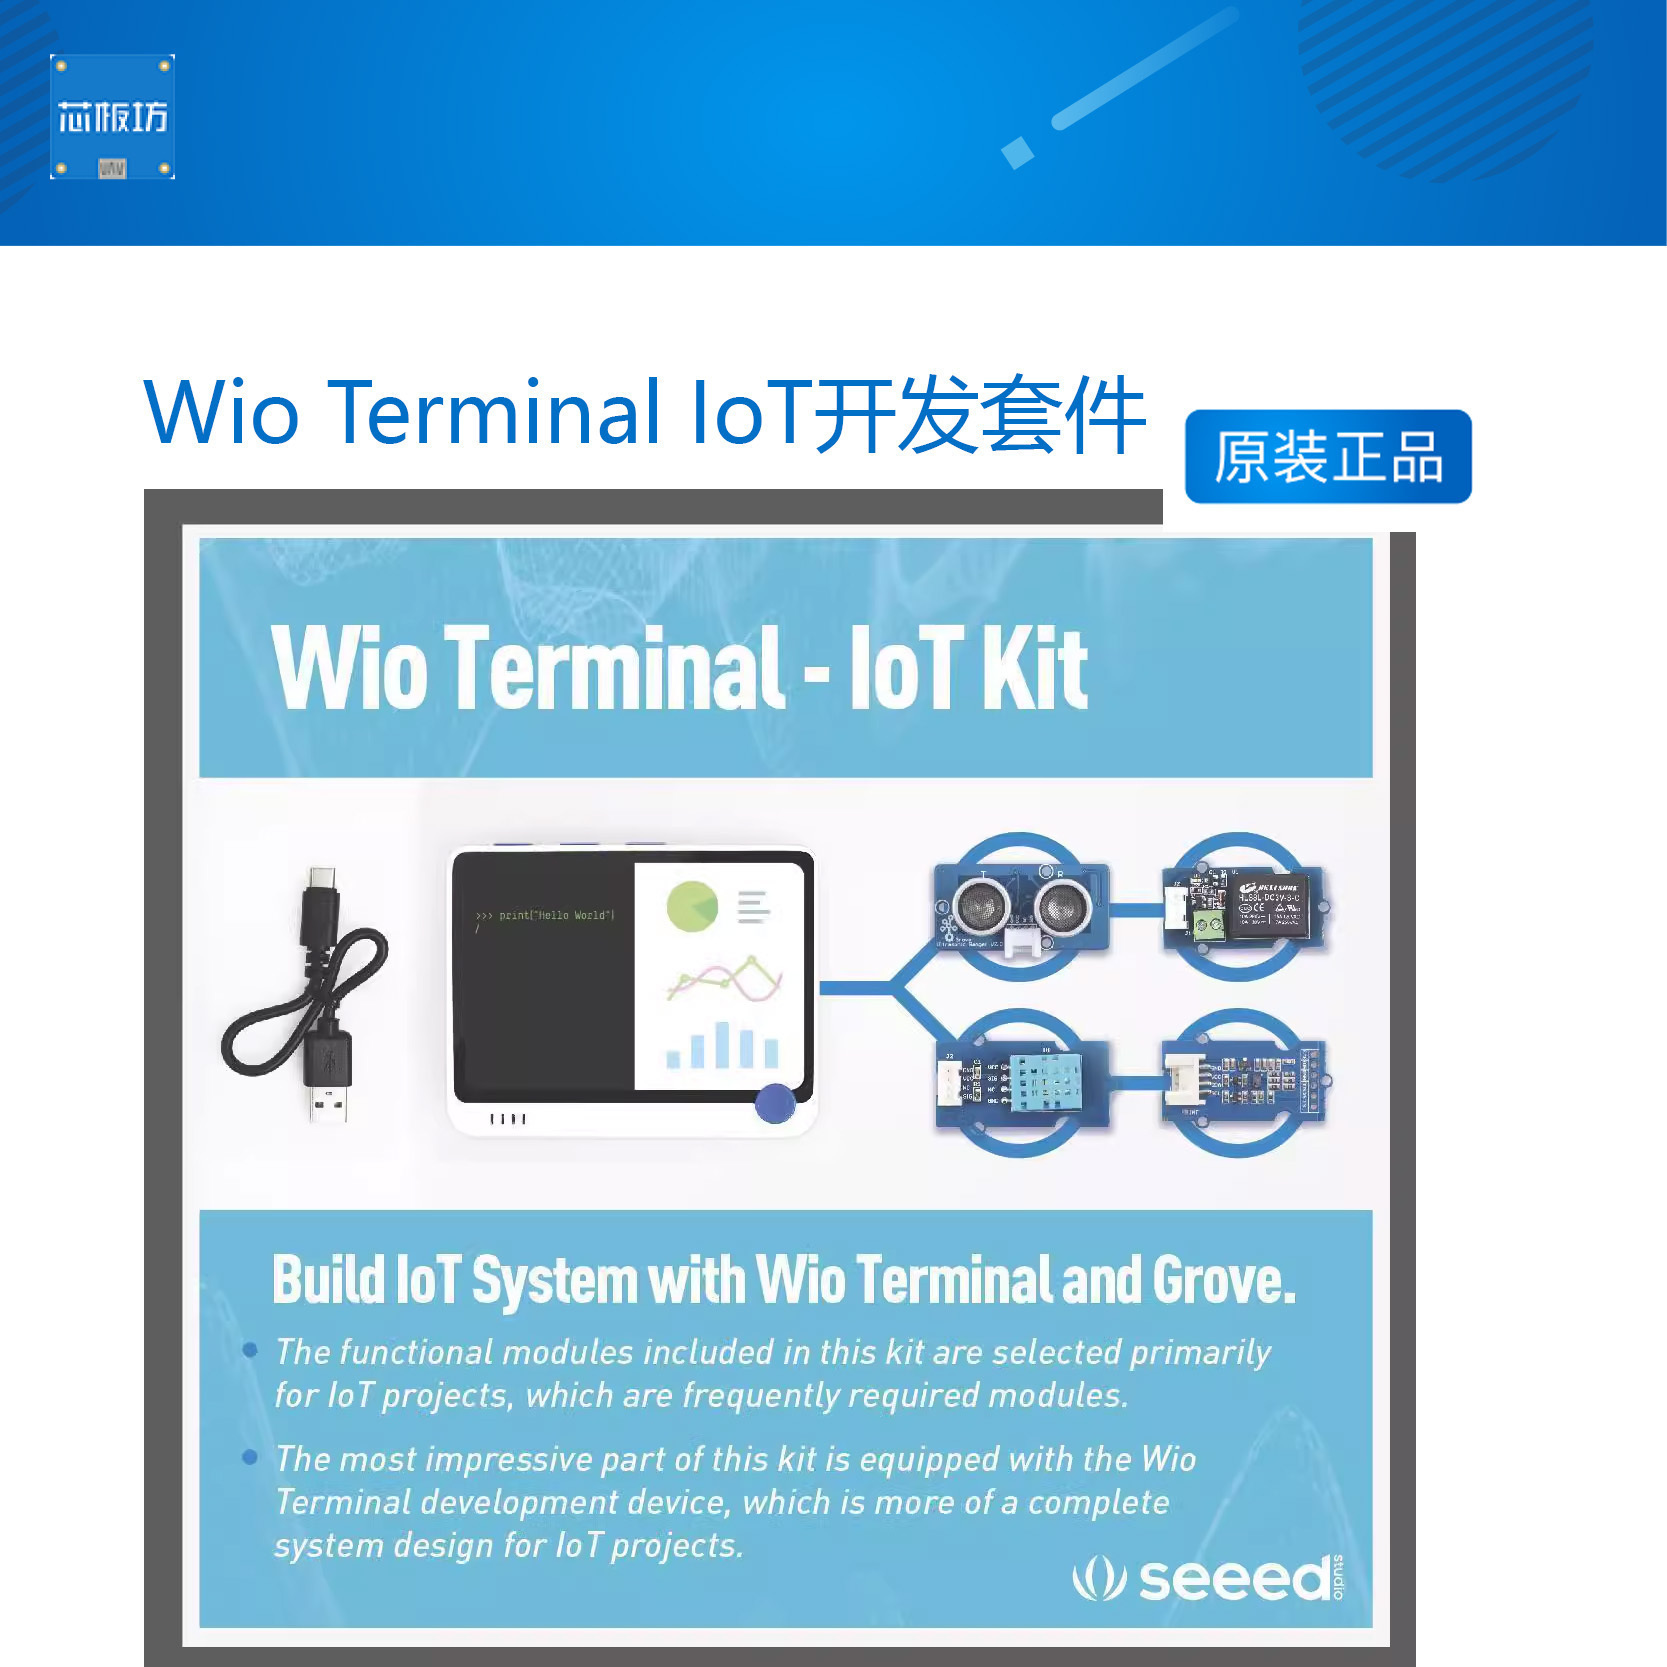 Wio Terminal IoT开发套件物联网应用 电子元器件市场 开发板/学习板/评估板/工控板 原图主图